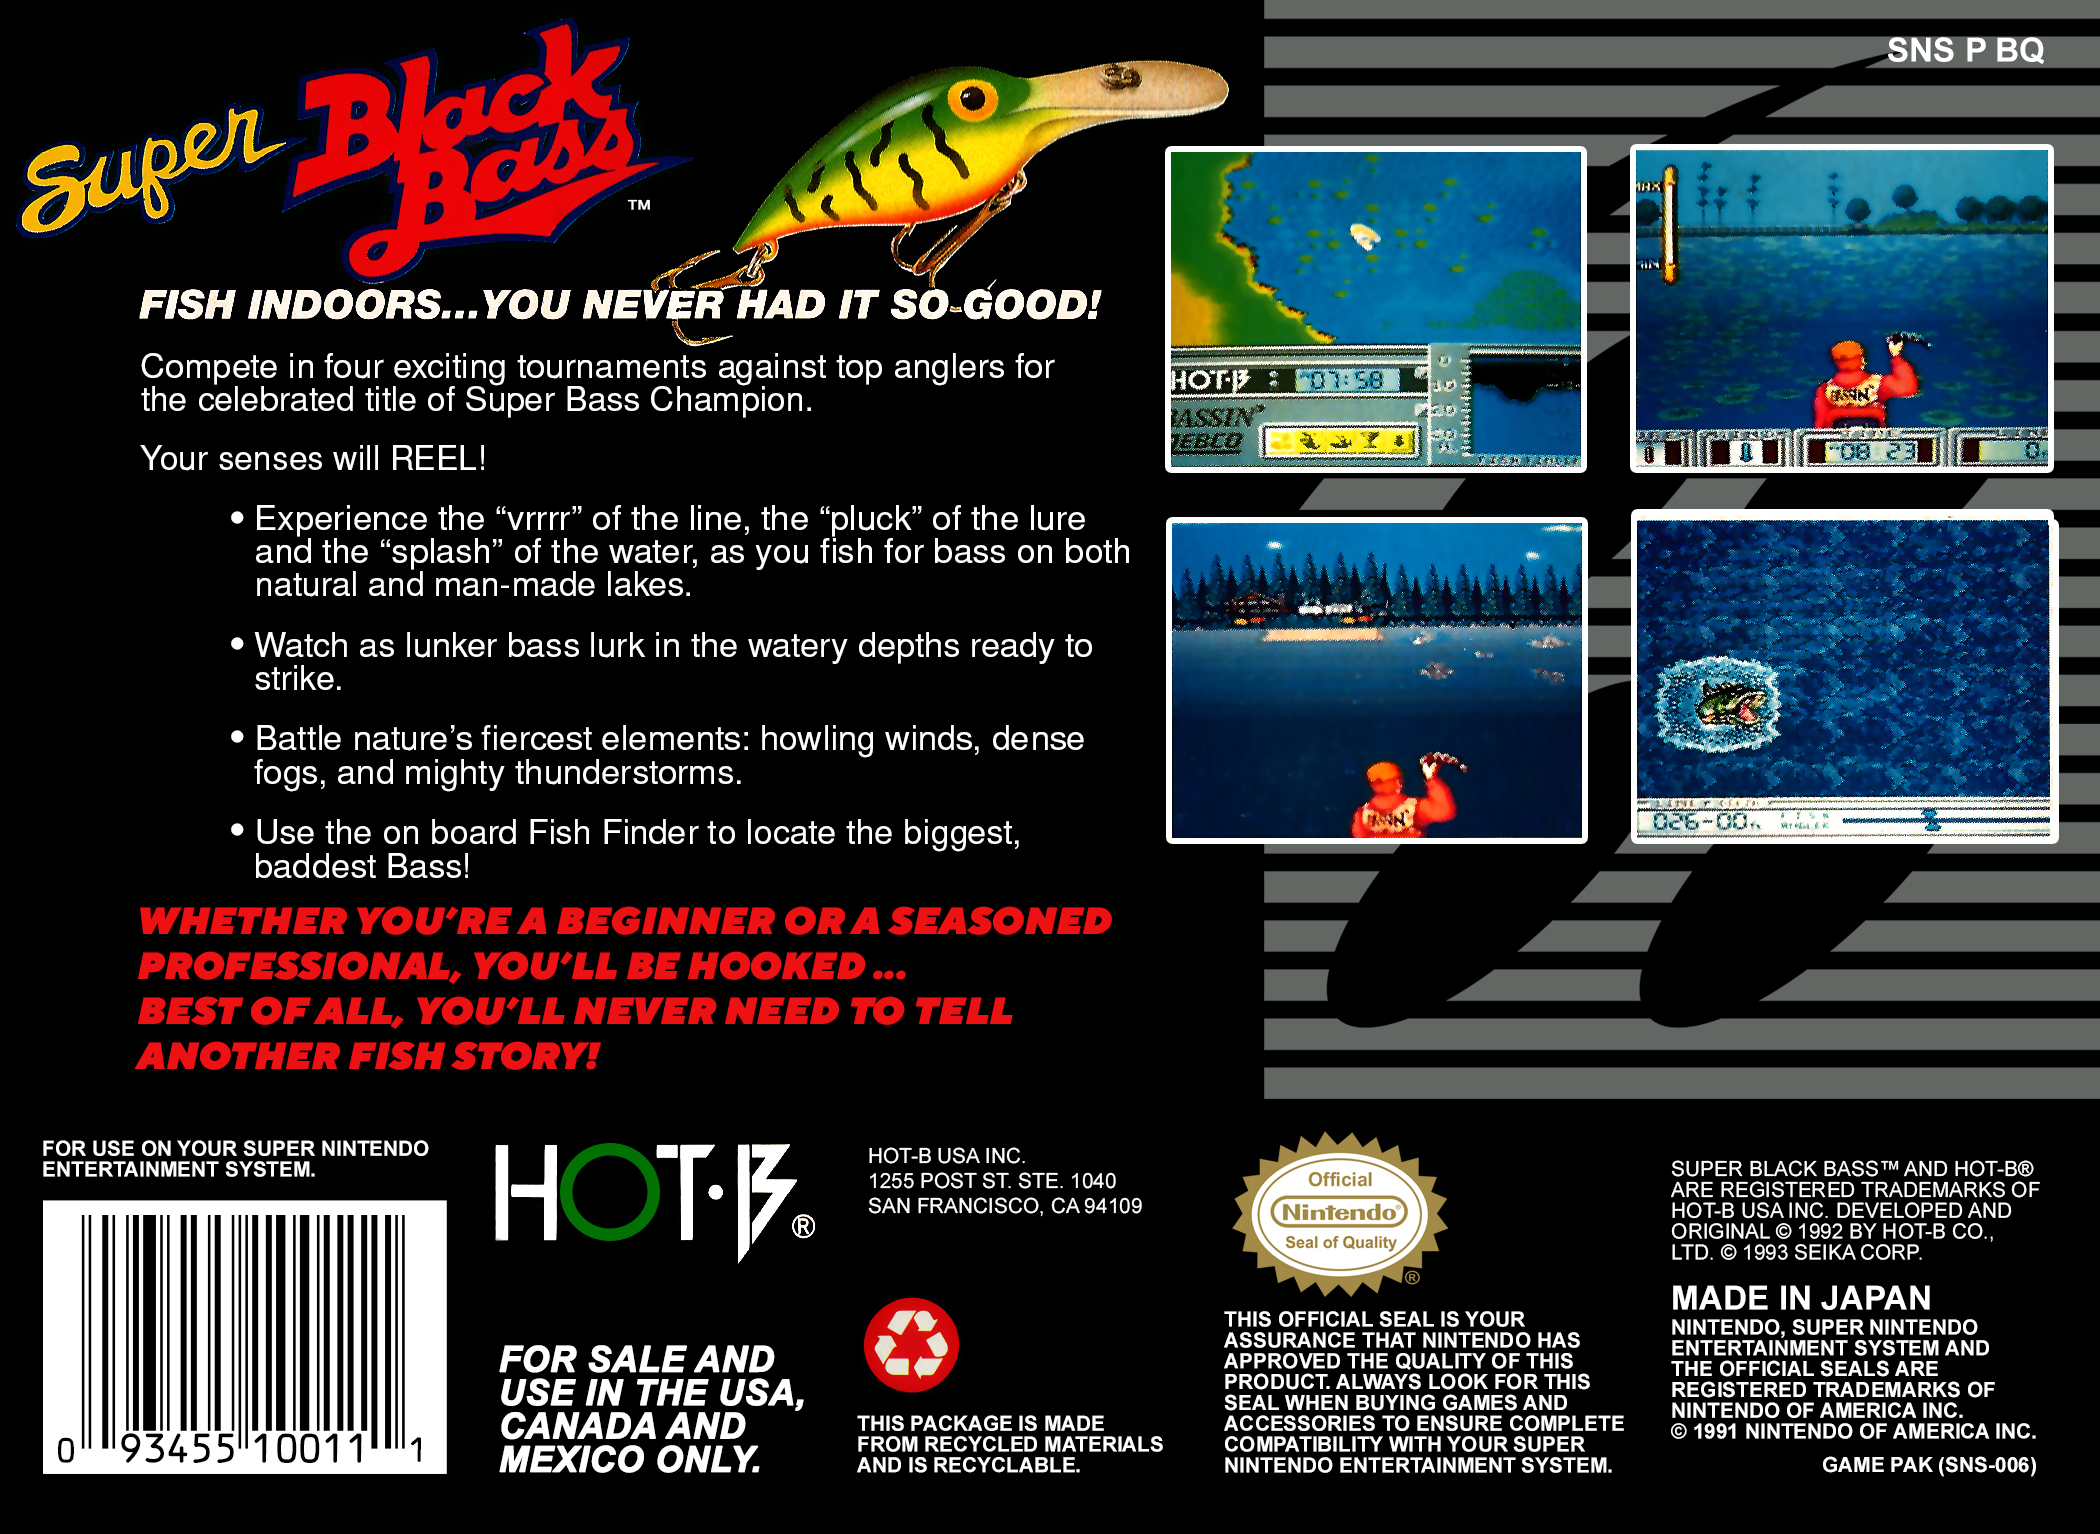 Super Black Bass Images - LaunchBox Games Database